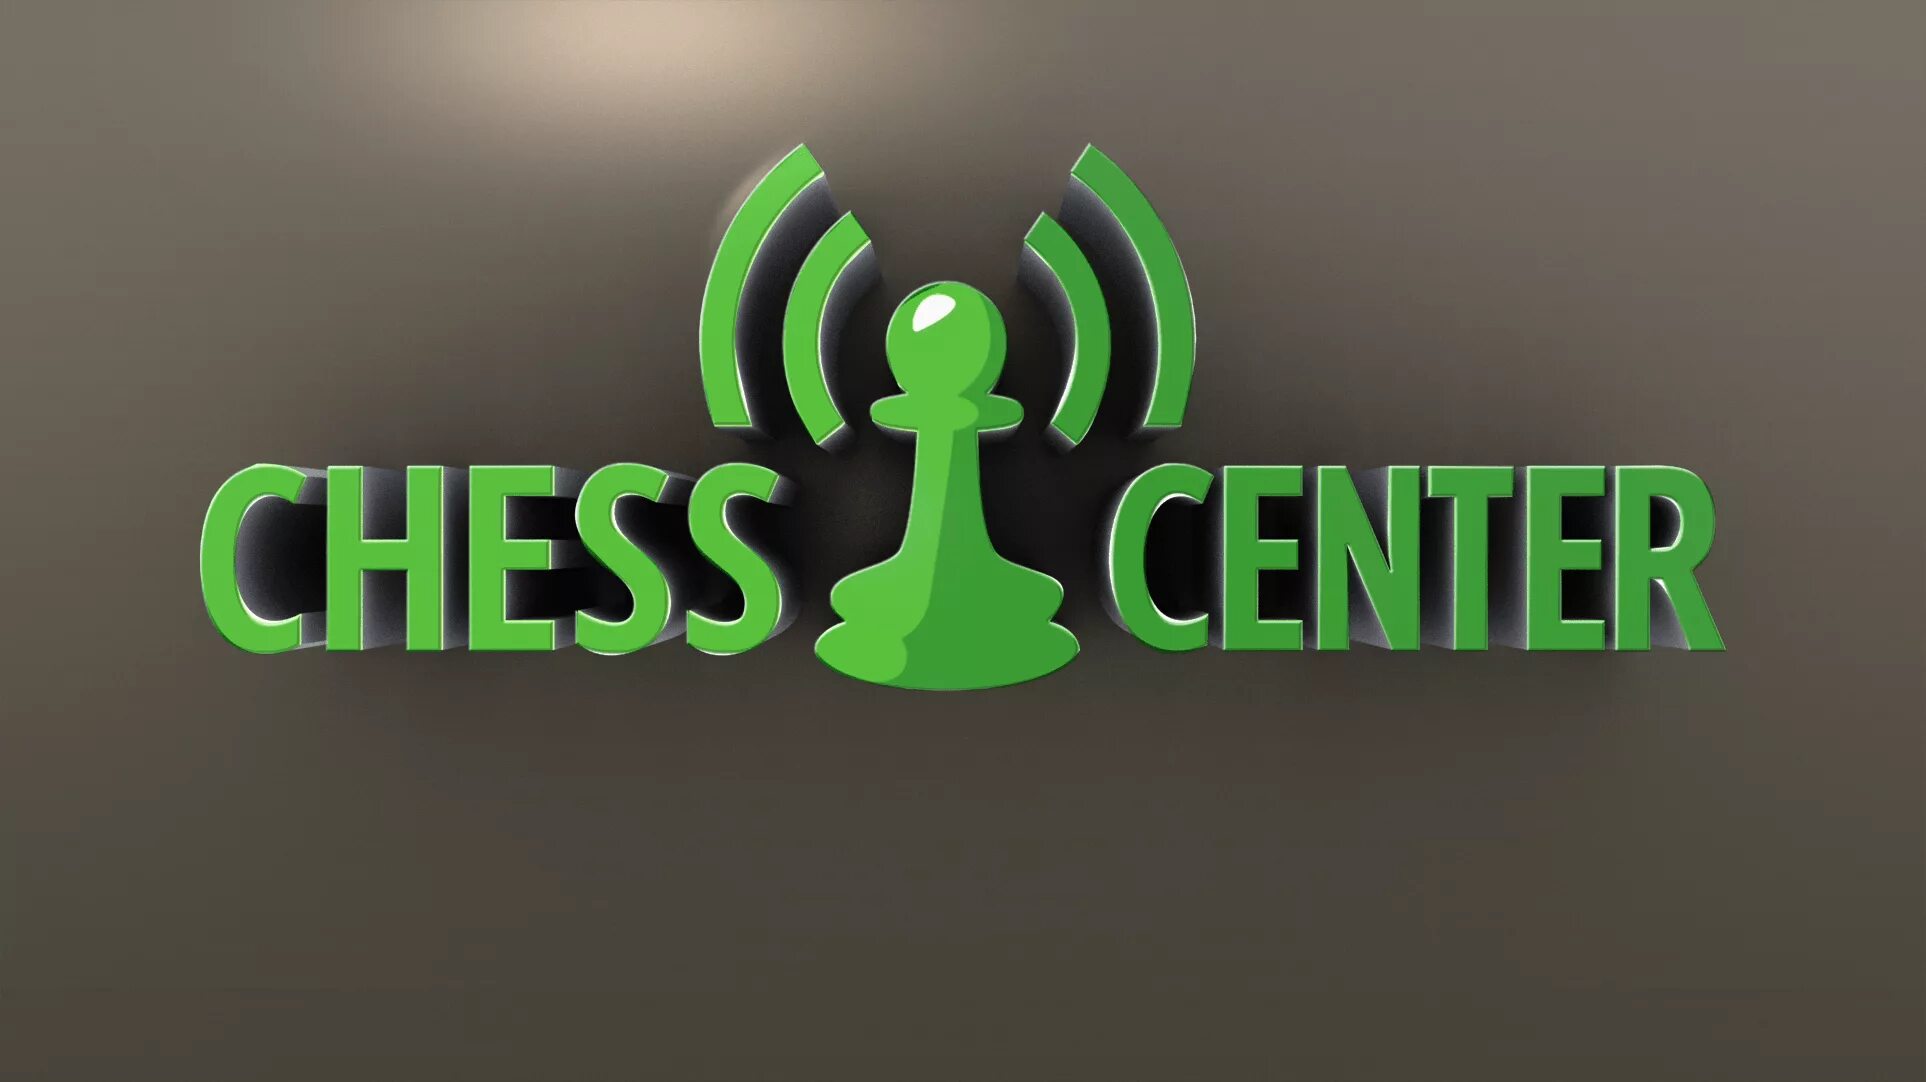 Chess.сом. Chess com logo. Лого Чесс ком. Ческом картинка.